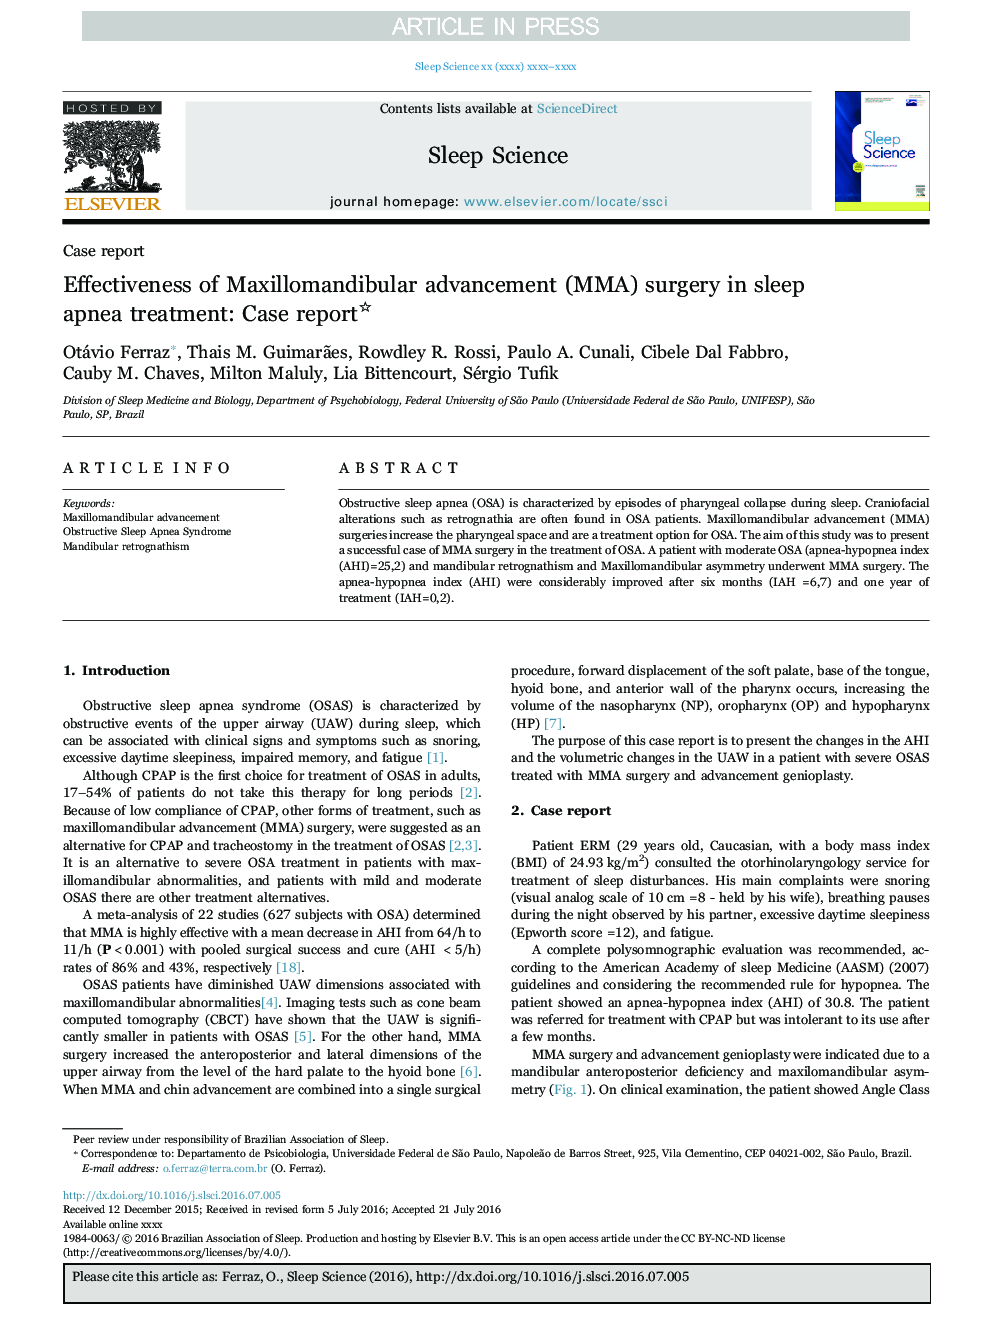 Effectiveness of Maxillomandibular advancement (MMA) surgery in sleep apnea treatment: Case report